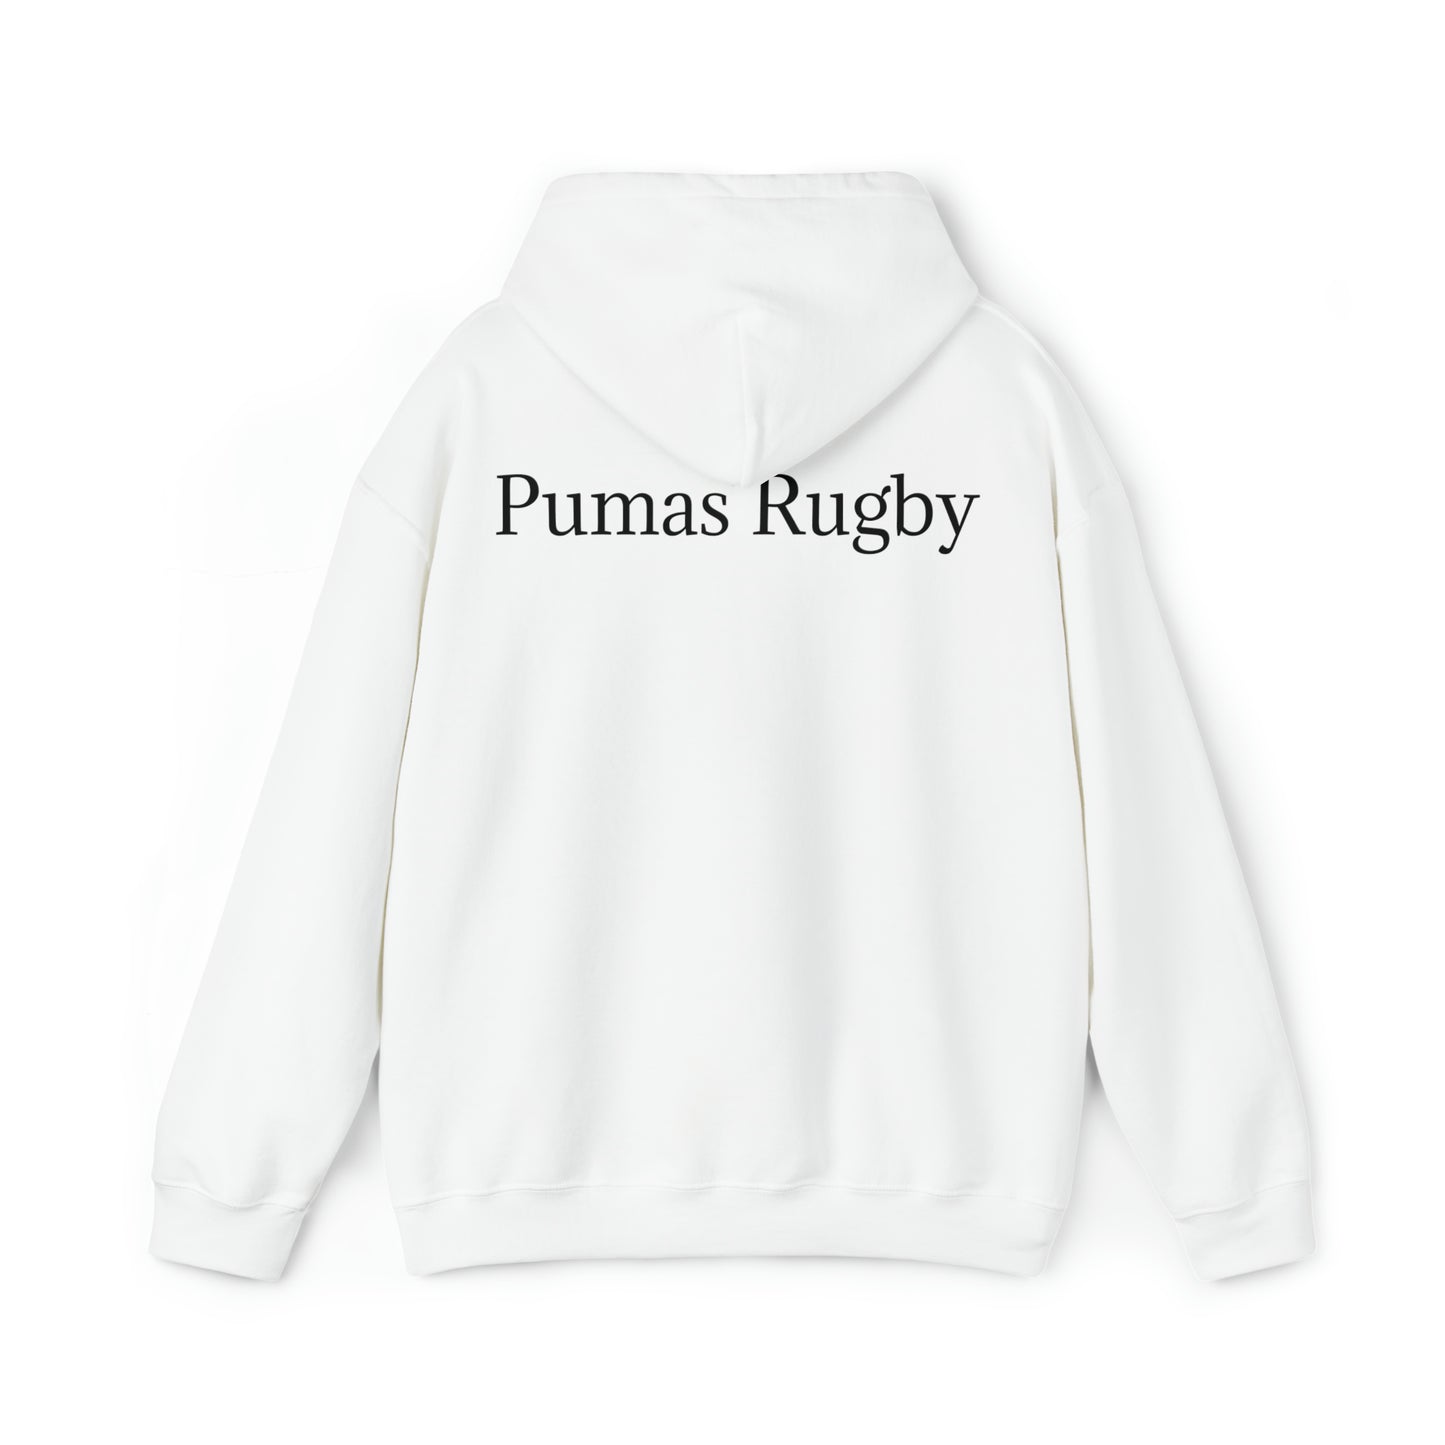 Pumas RWC photoshoot - light hoodies